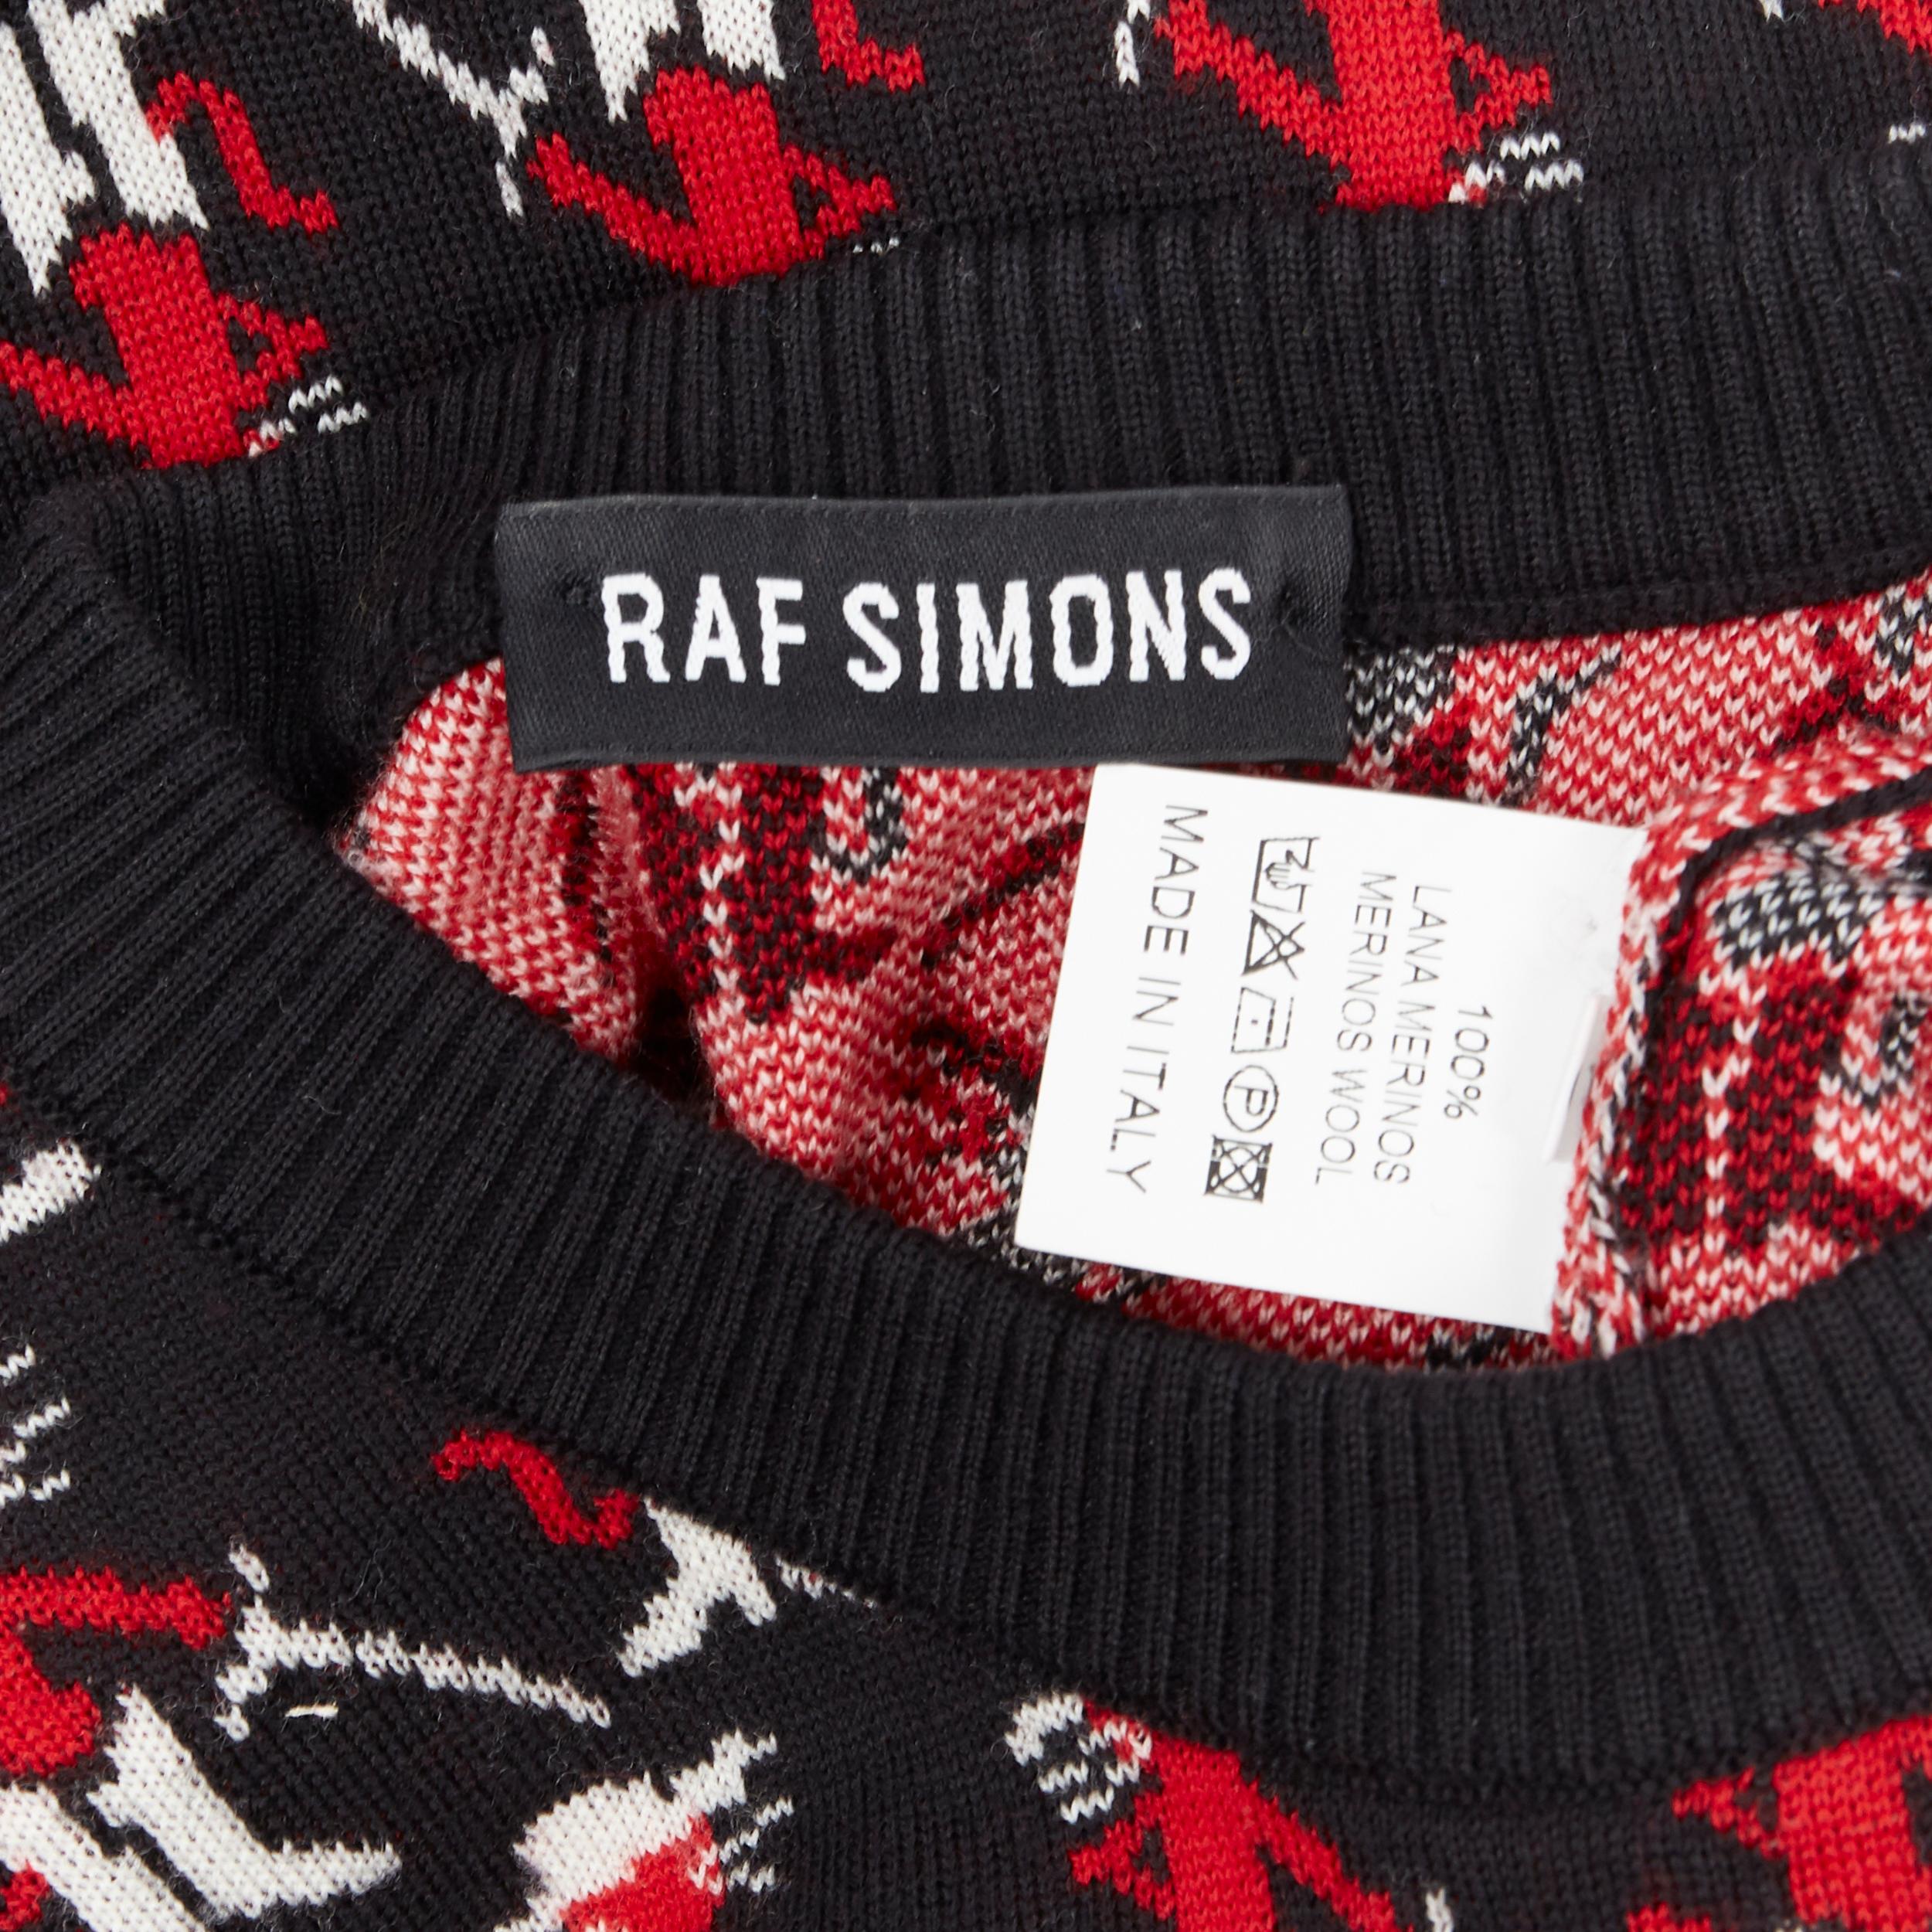 RAF SIMONS 100% merino wool red figurine knitted sleeveless sweater vest S 1